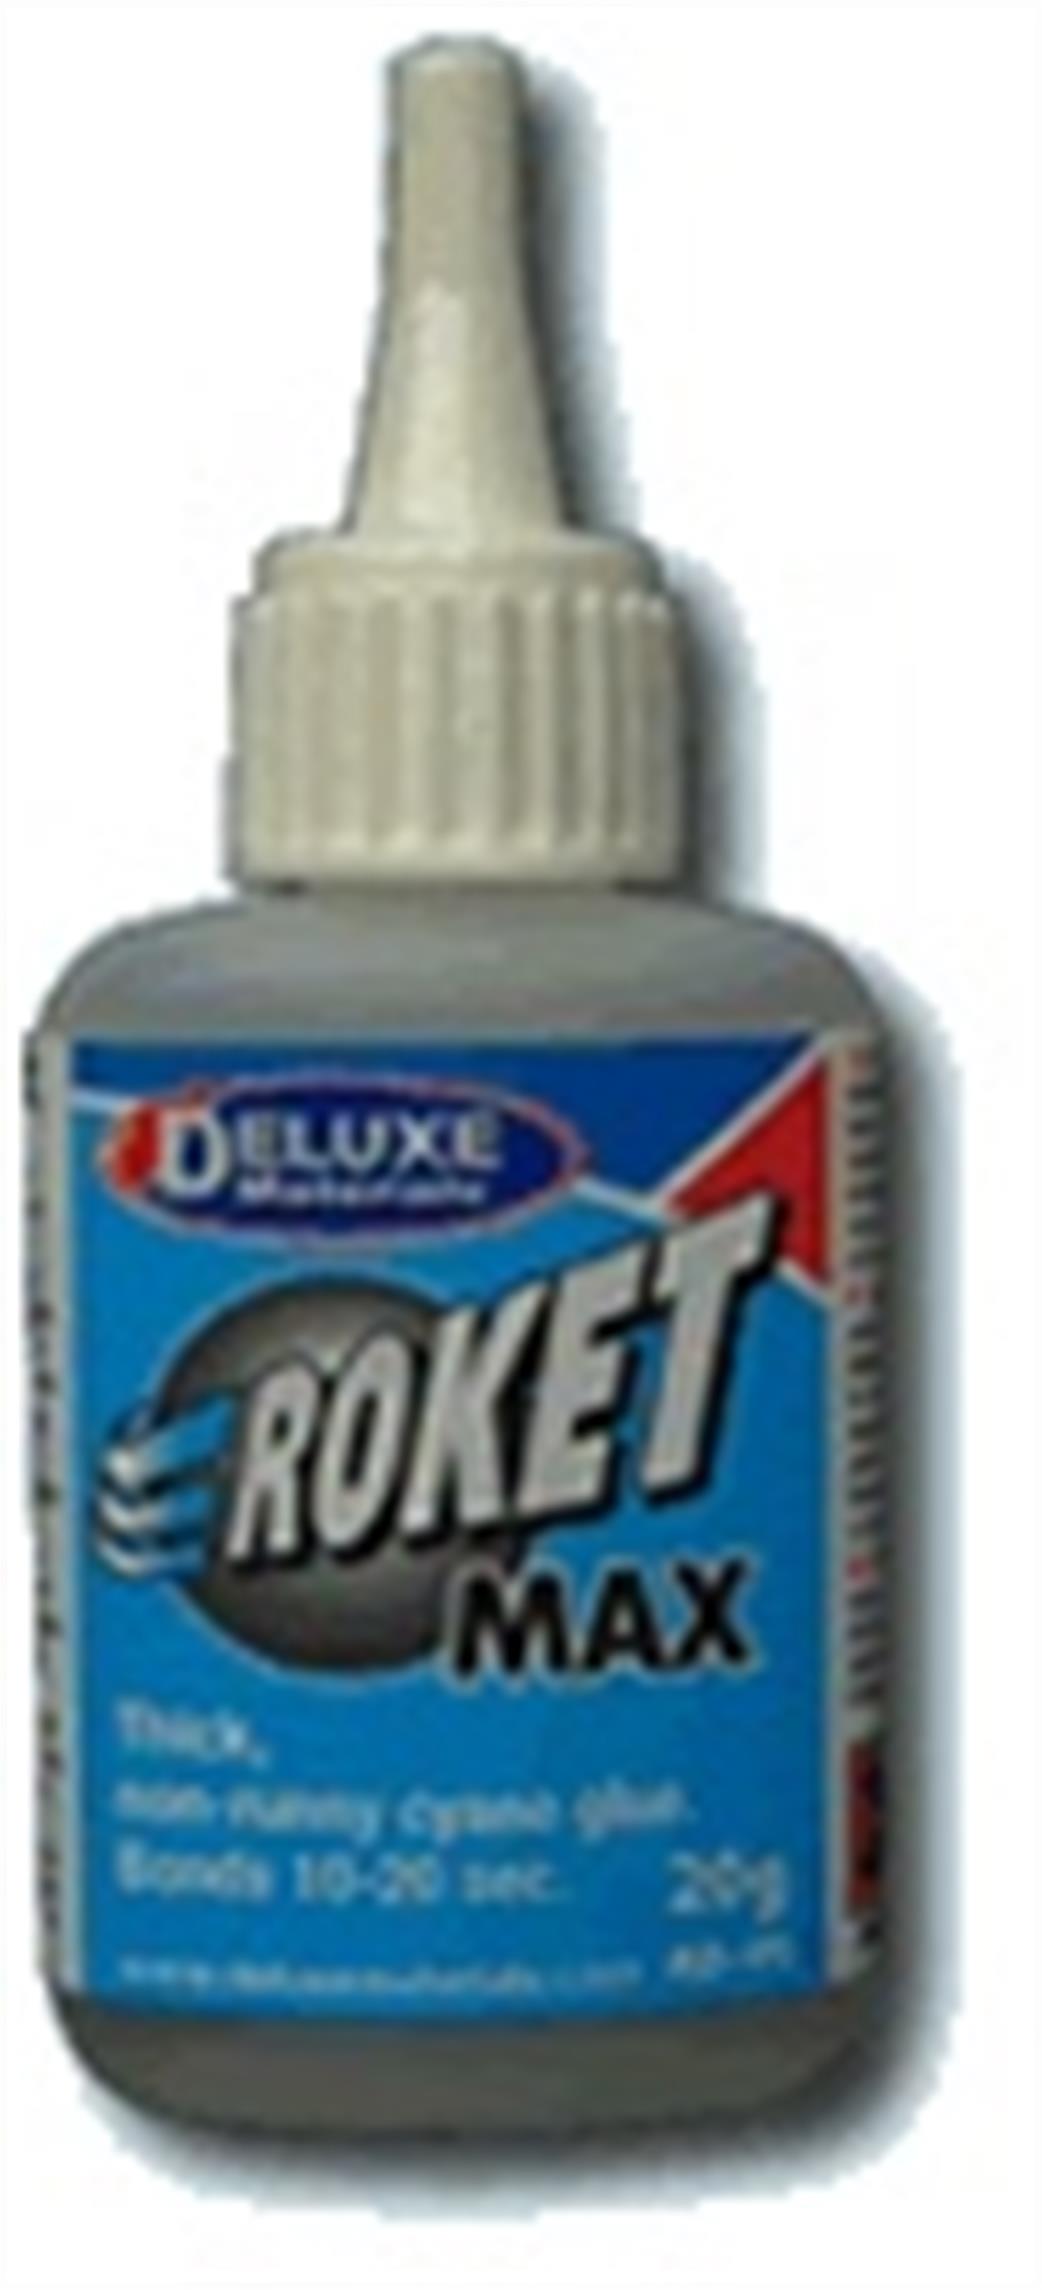 Deluxe Materials  AD45 Roket Max Thick Cyano Super Glue 20g